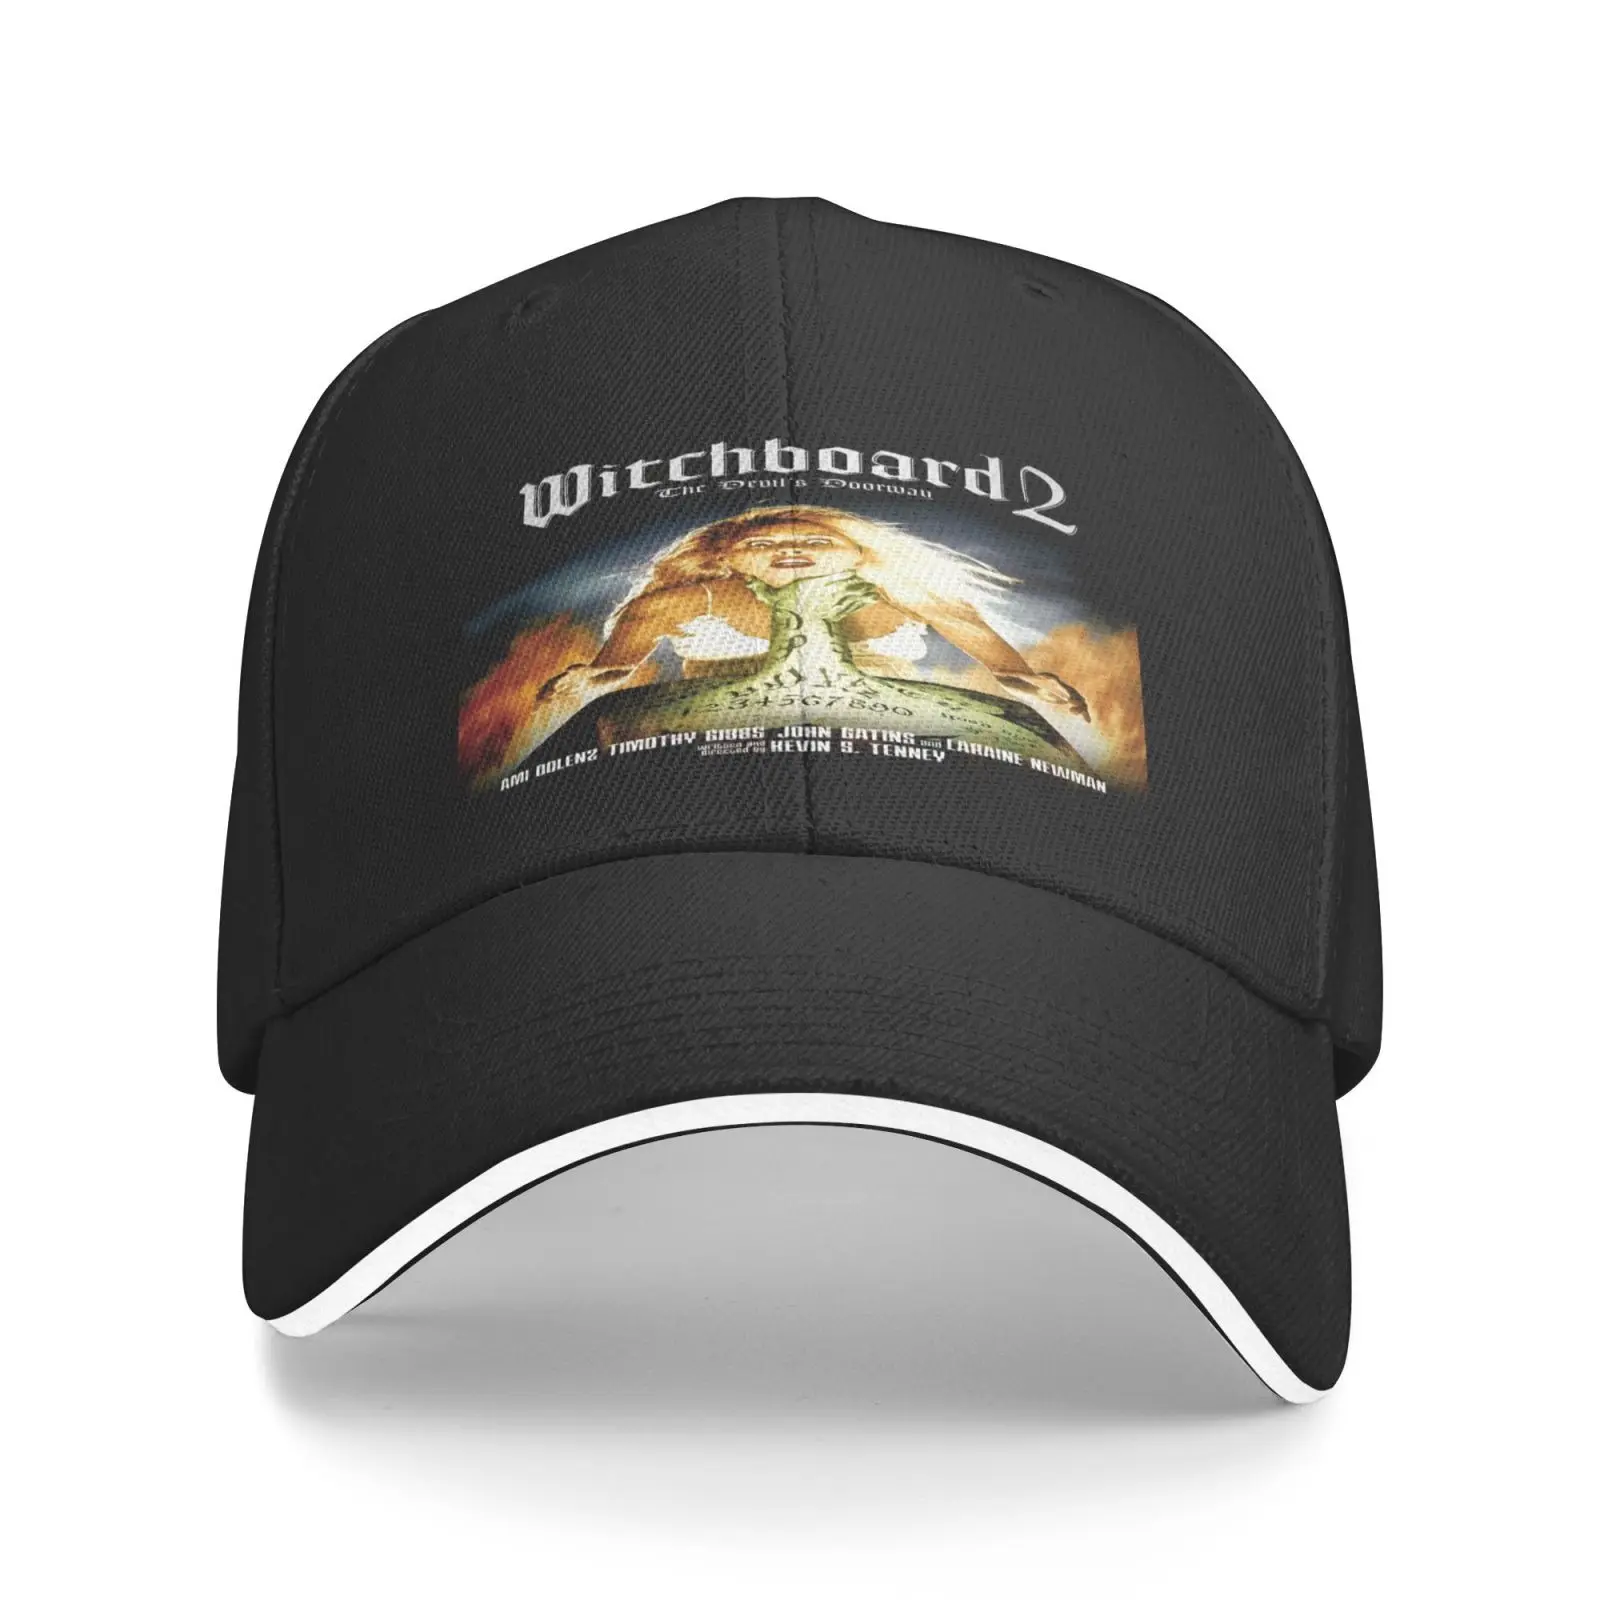 

Кепка Witchboard 3612, Мужская зимняя шапка, Балаклава Cowgirl, кепка для мальчиков, женщин, мужчин, шапки с индивидуальным логотипом, берет Cowgirl Adventure ...